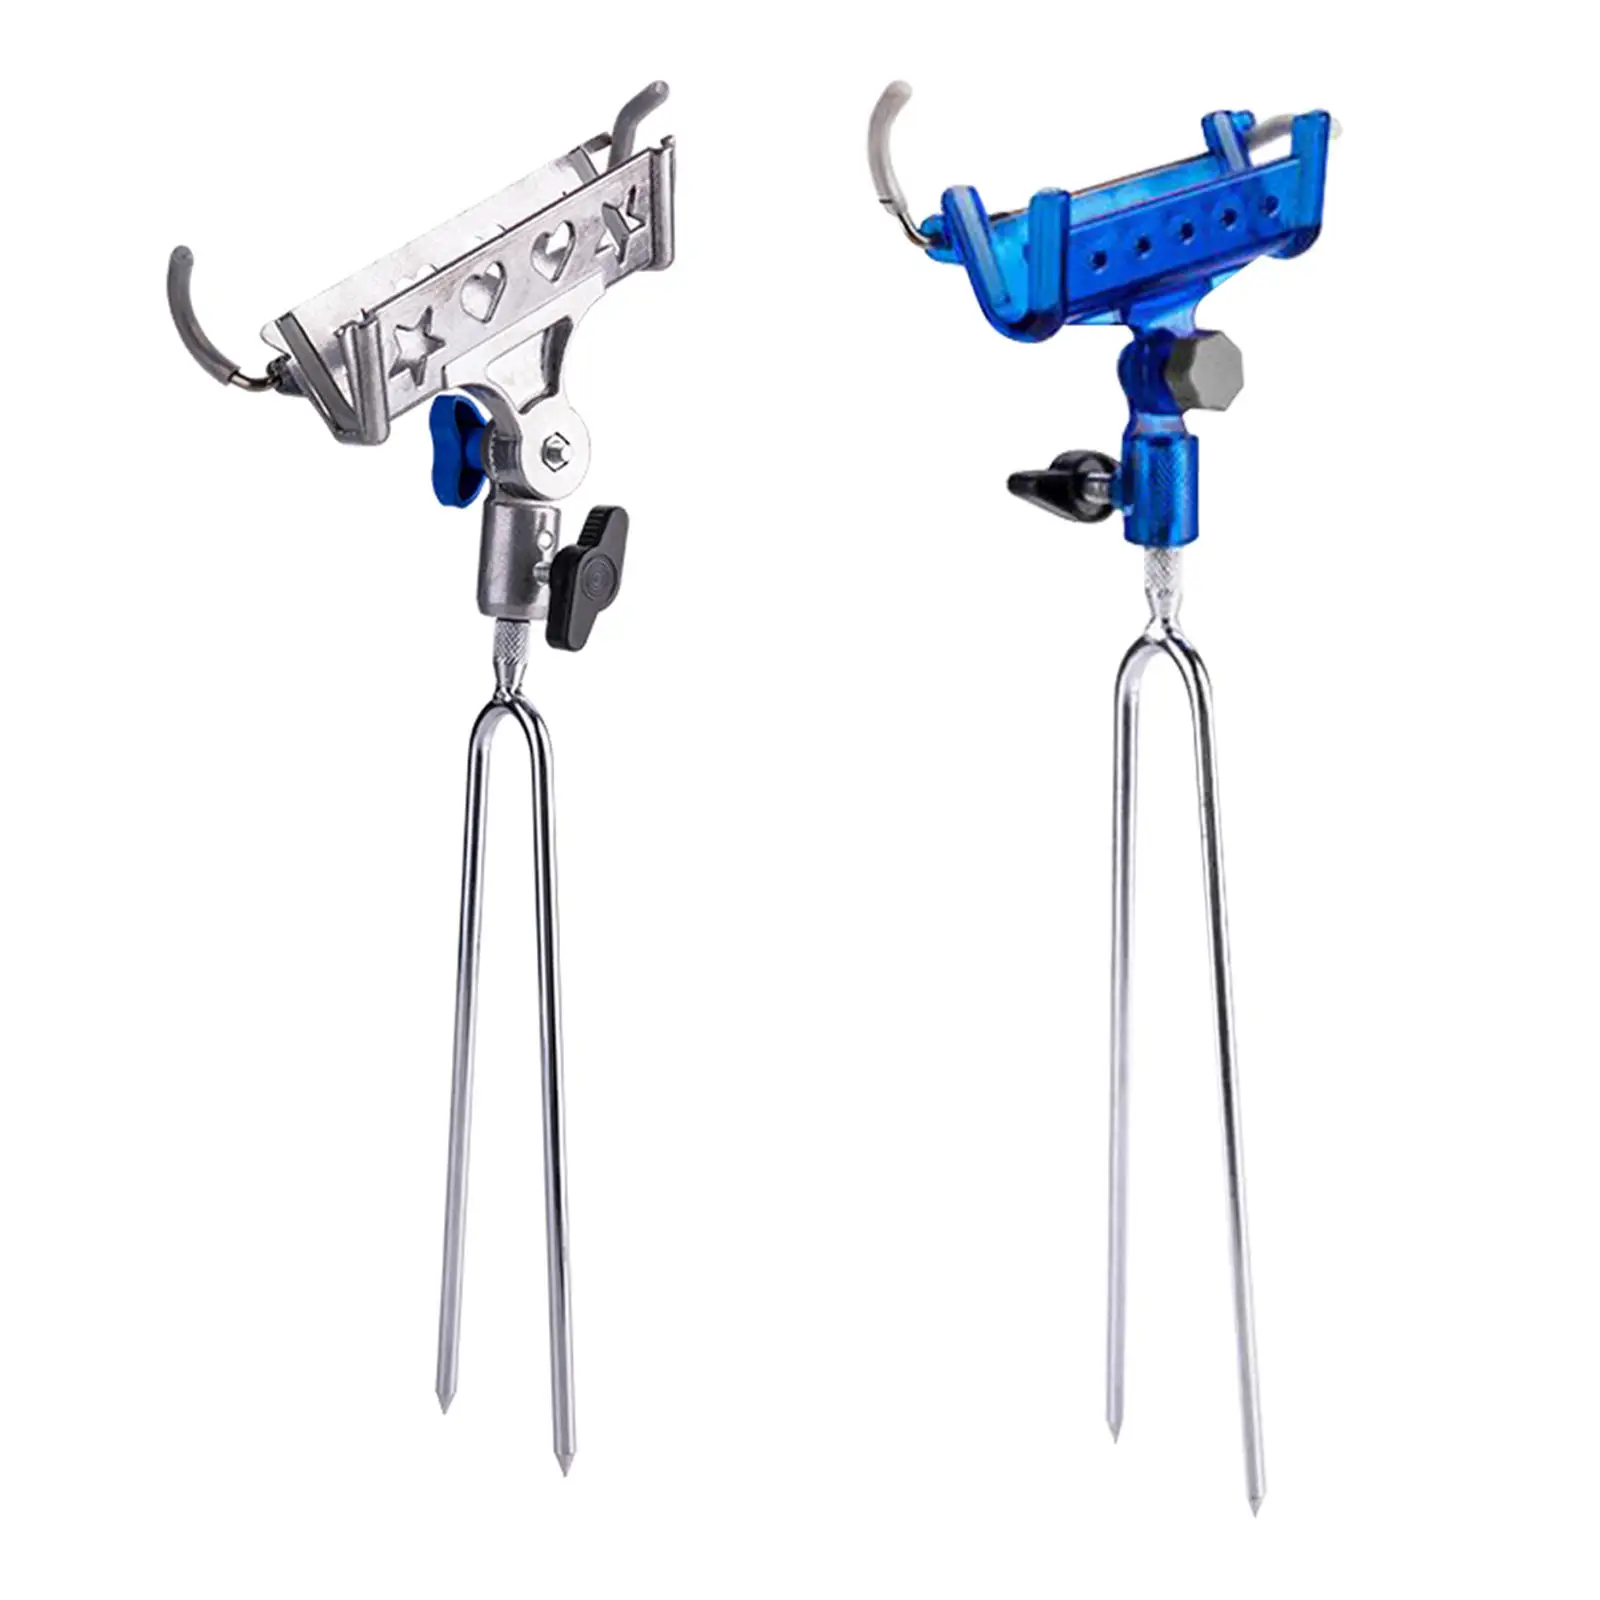 Travel Automatic Fishing Rod Holder Rack Ground Stake Stand Fish Pole Bracket Supplies Tool Adjustable Sensitivity AntiRust